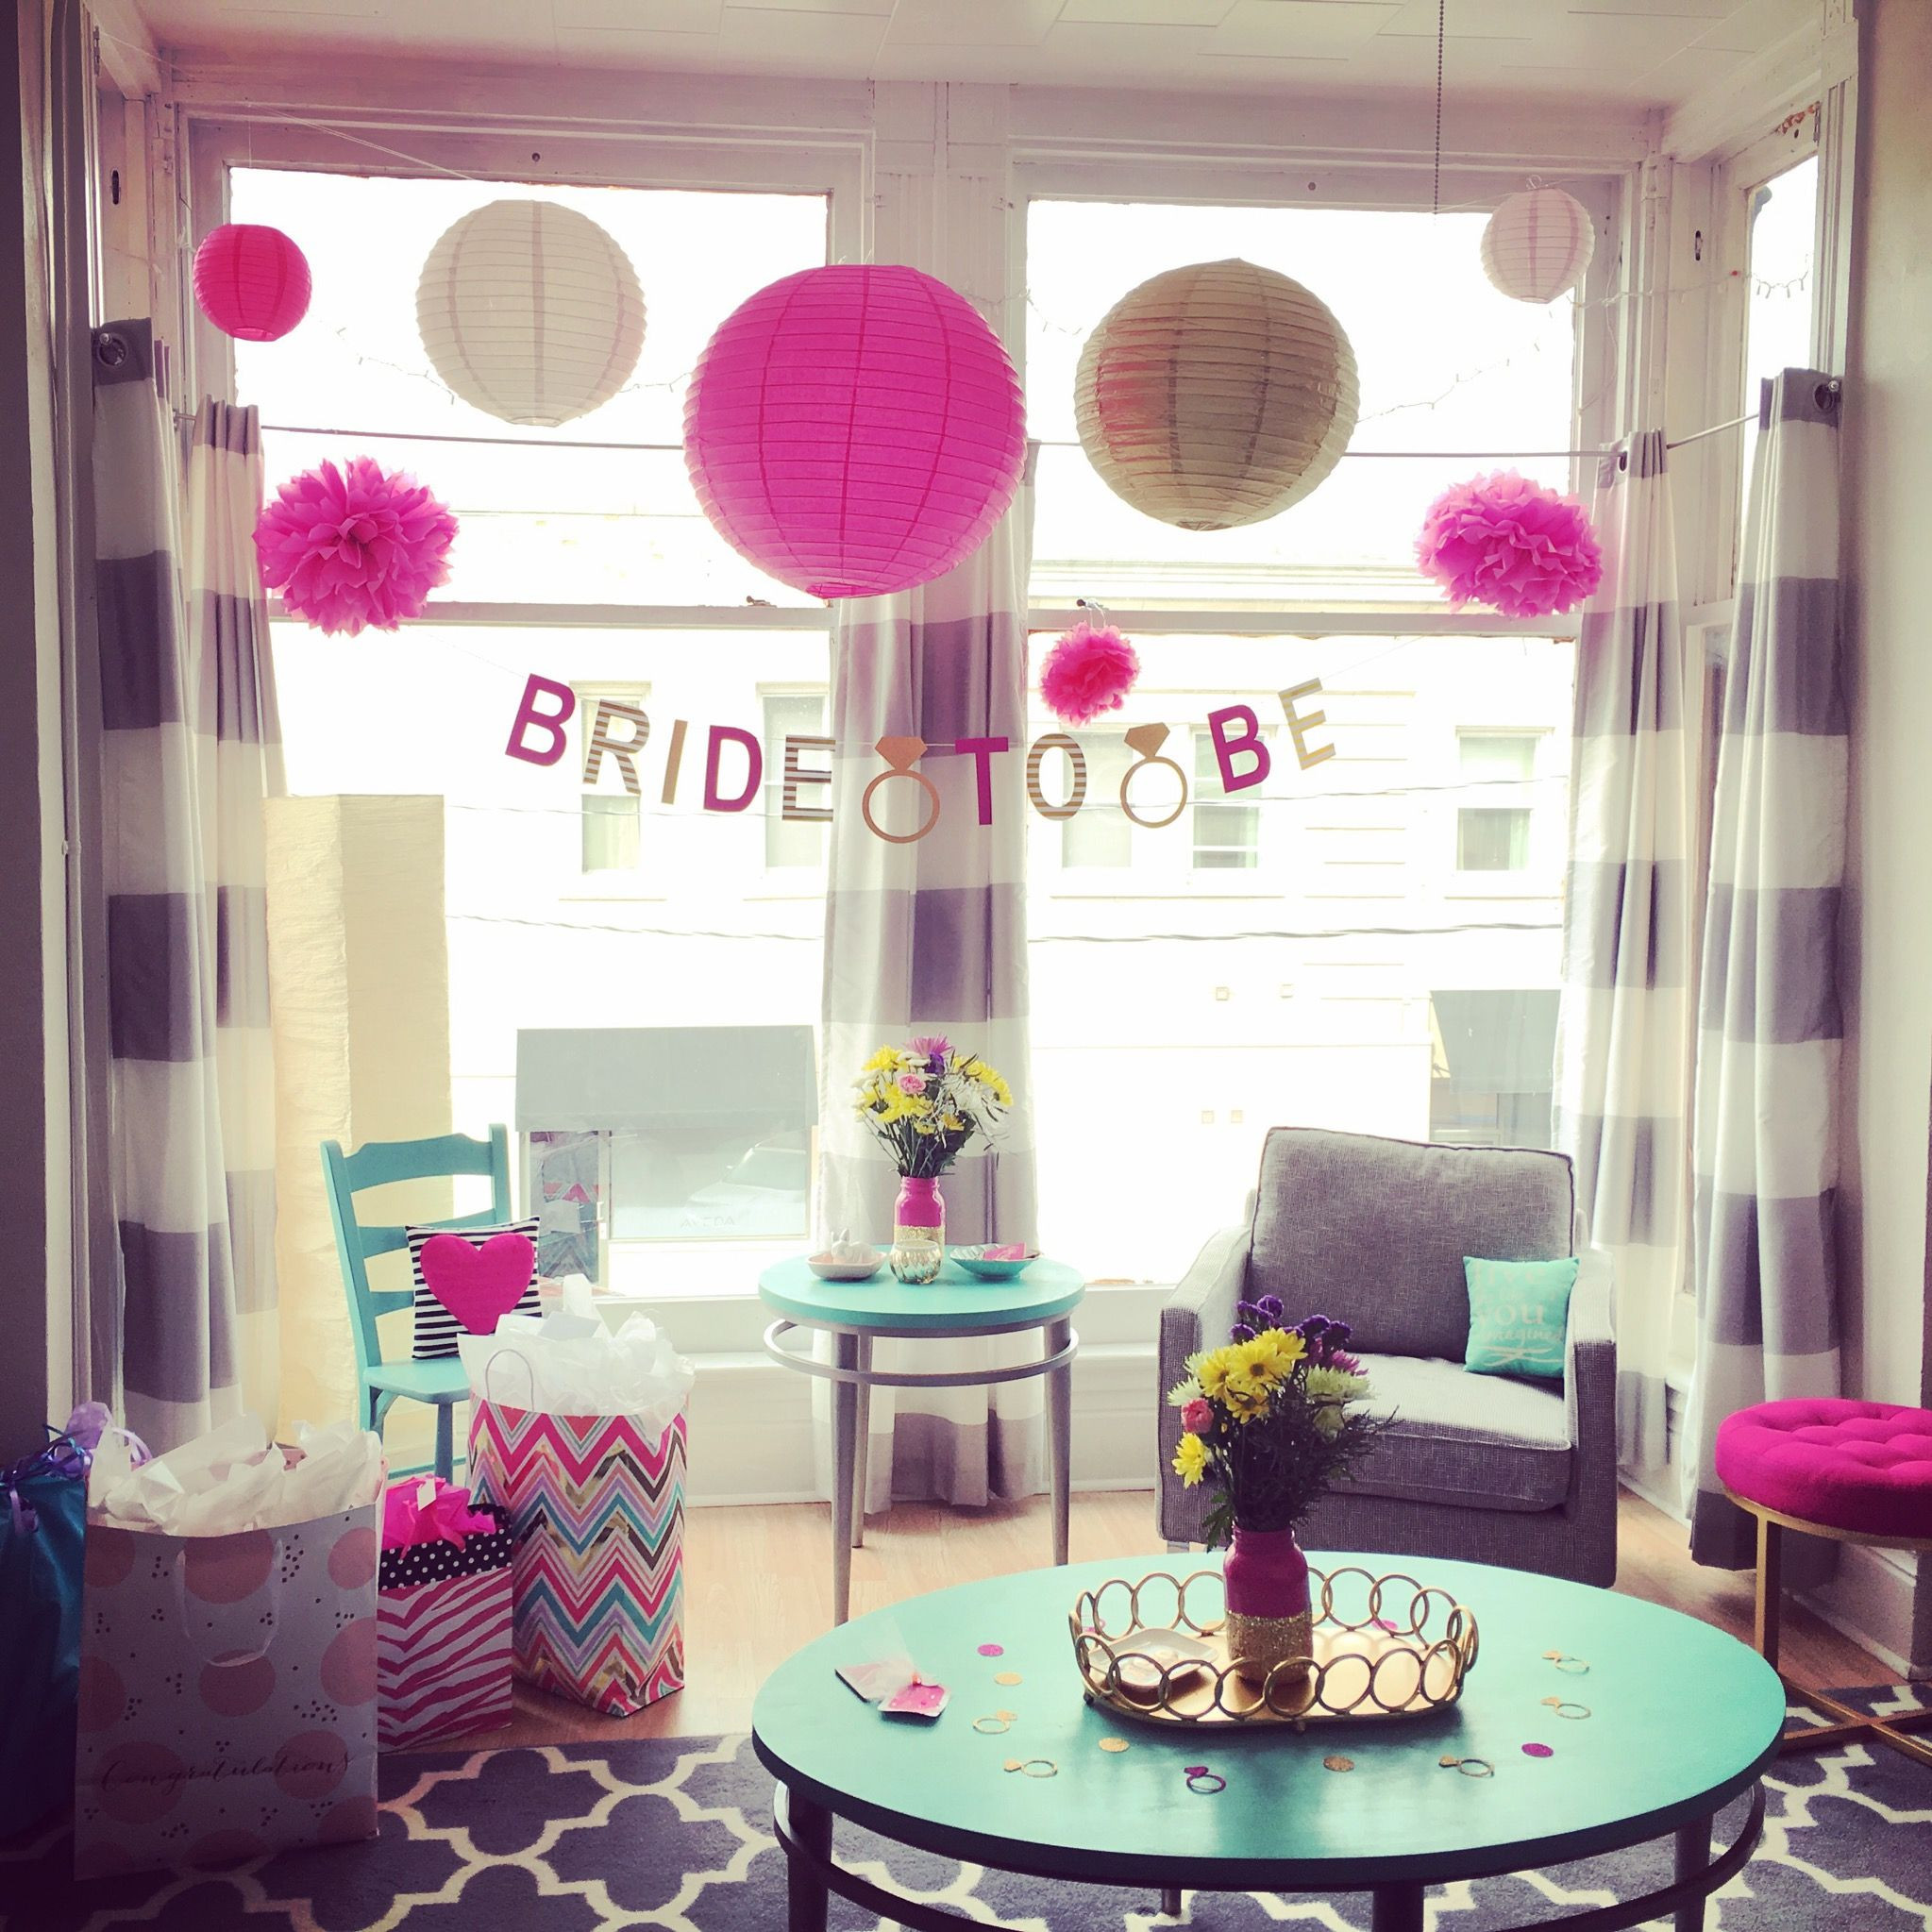 Home Bachelorette Party Ideas
 Bridal Shower Bachelorette Party Decorations at home